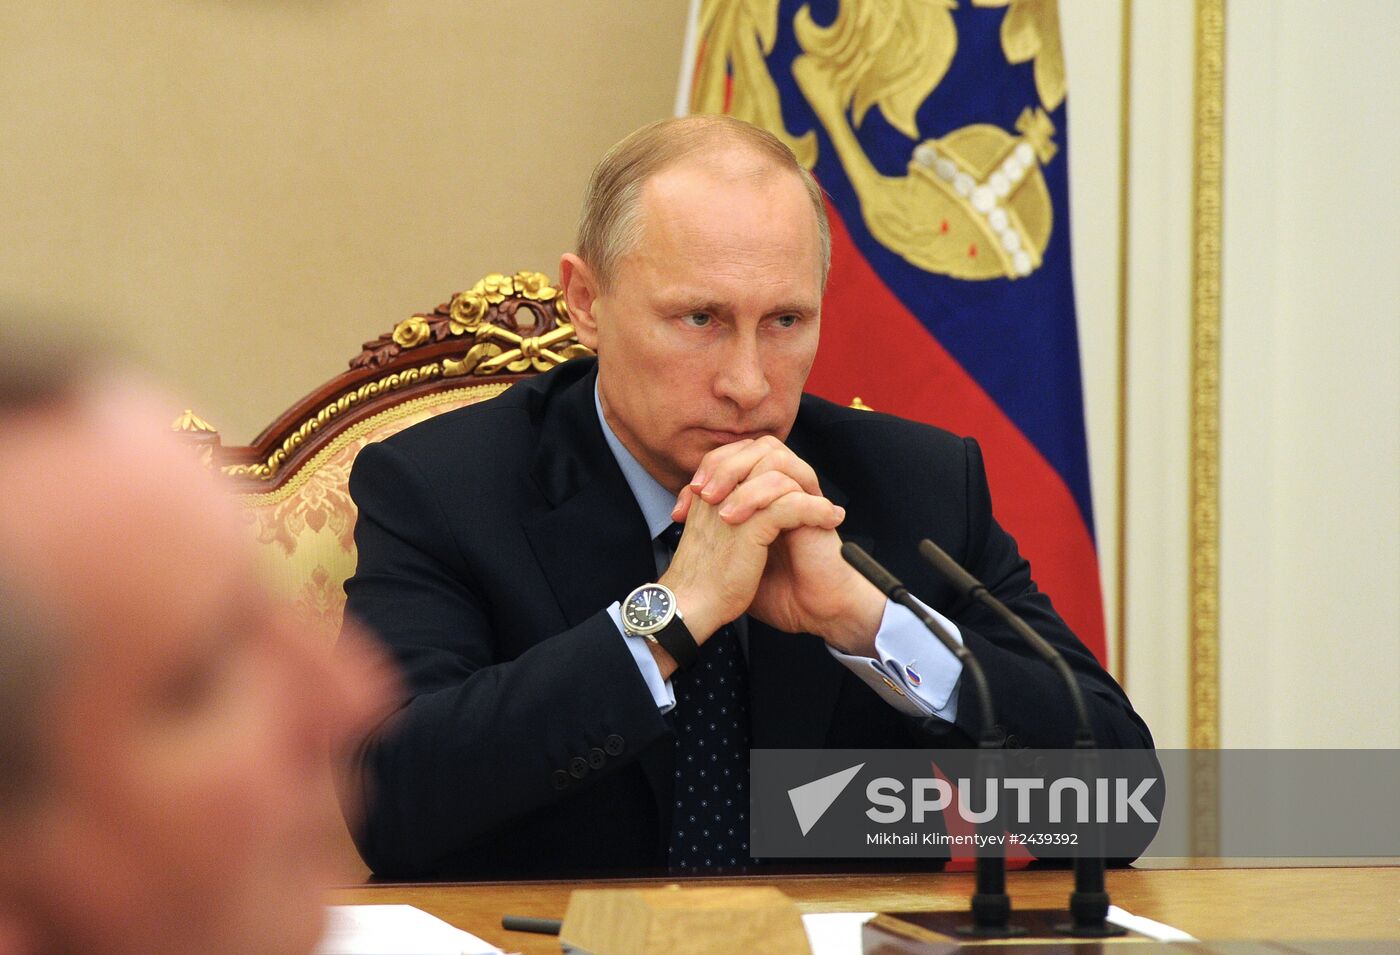 Vladimir Putin chairs government meeting